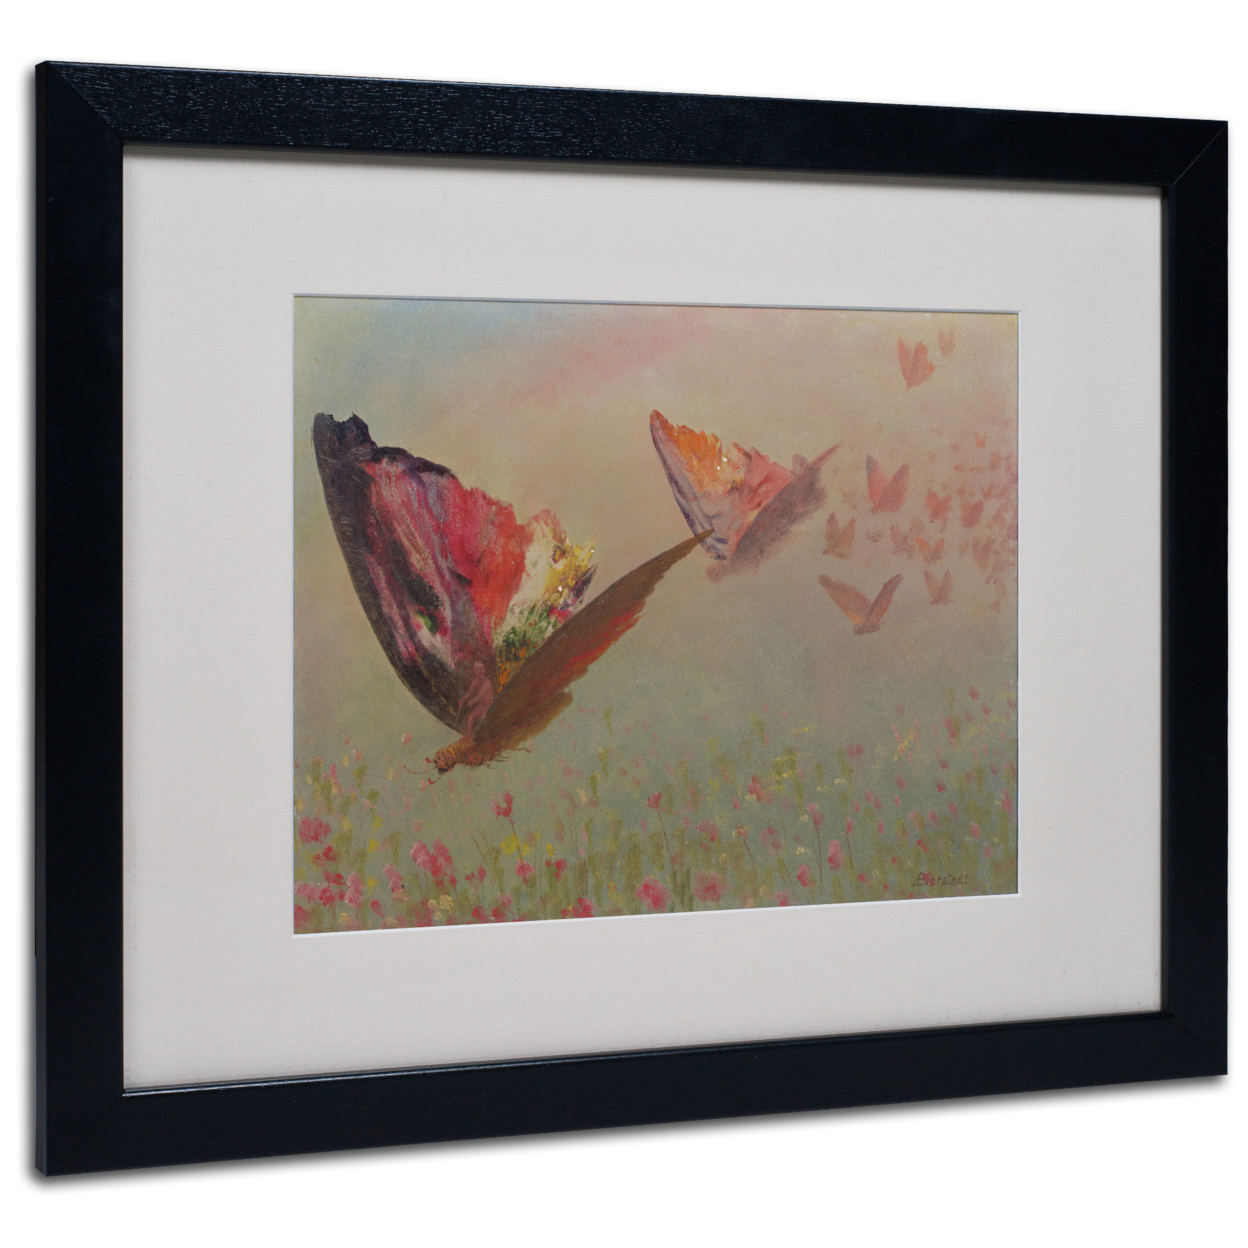 Albert Bierstadt 'Butterflies With Riders' Black Wooden Framed Art 18 X 22 Inches